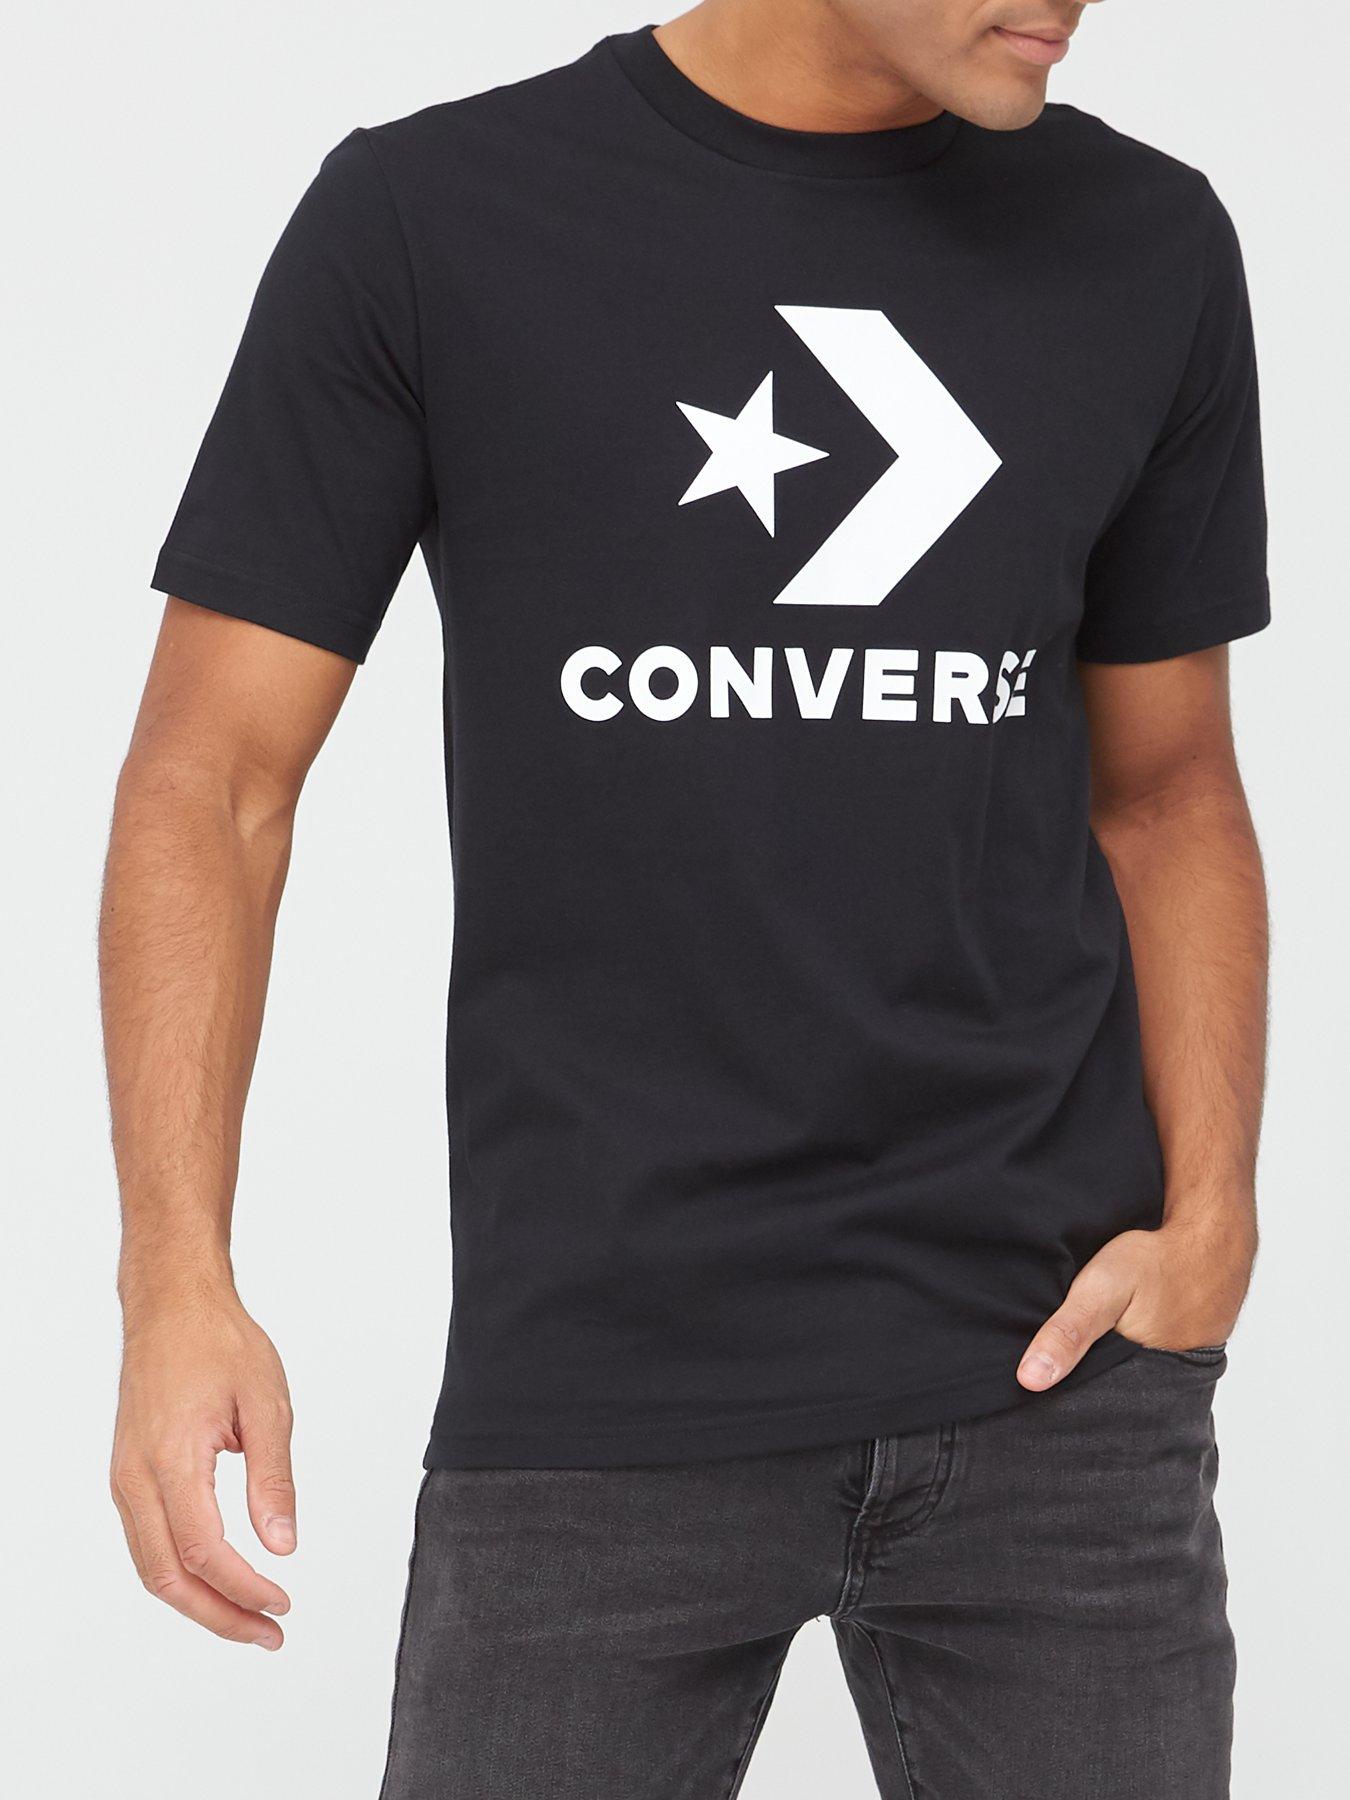 converse t shirts